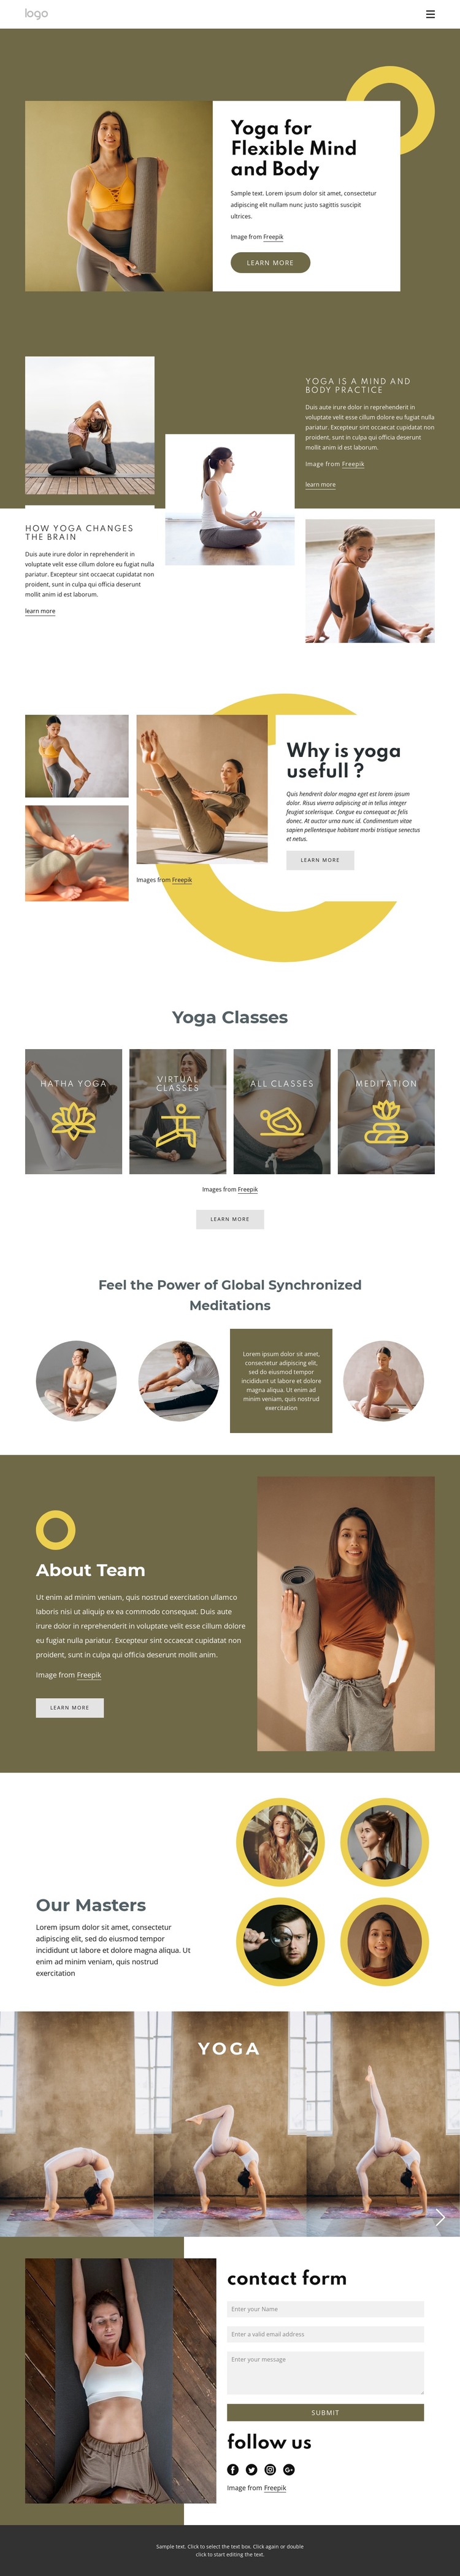 Traditional style yoga Web Design